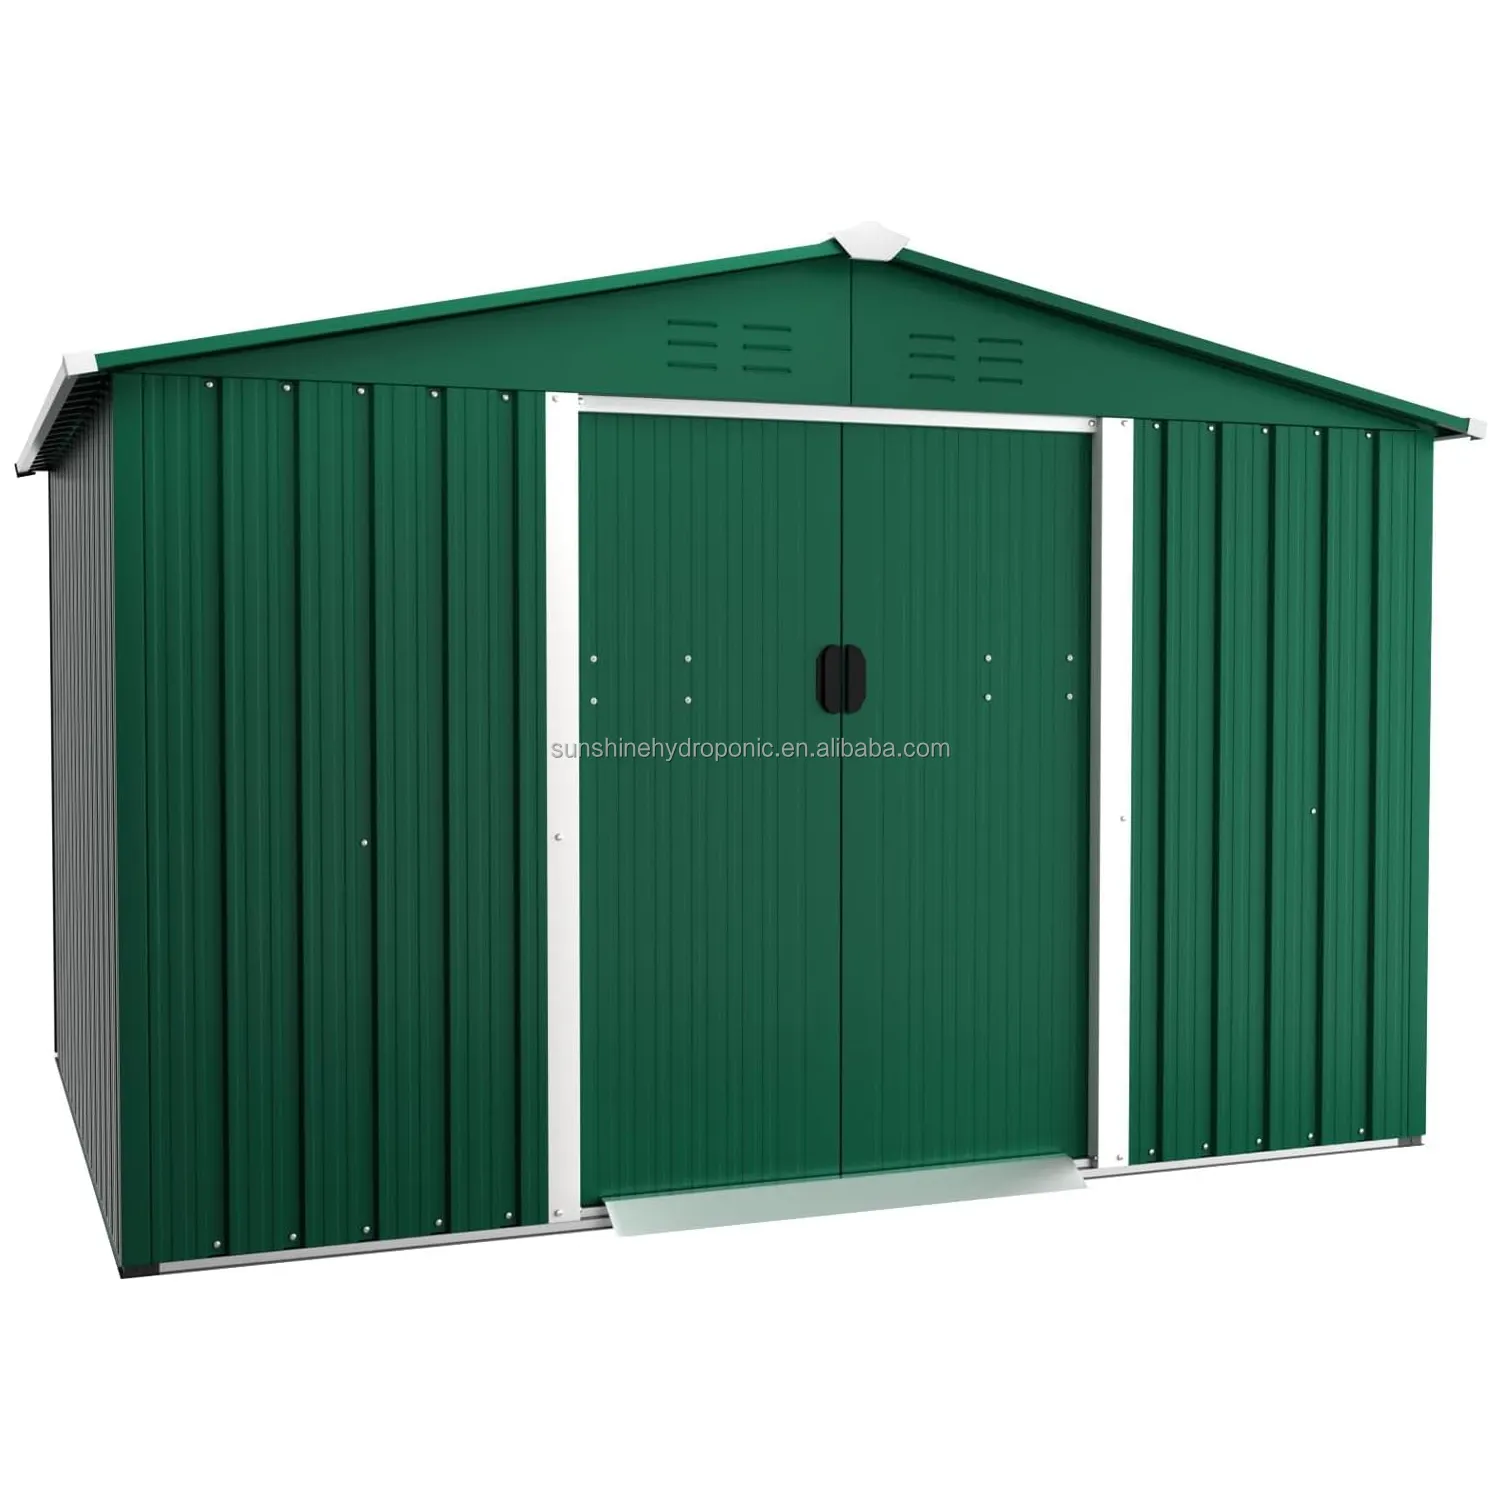 Custom metal steel black outdoor shed garden garages tool shed outdoor metal storage sheds